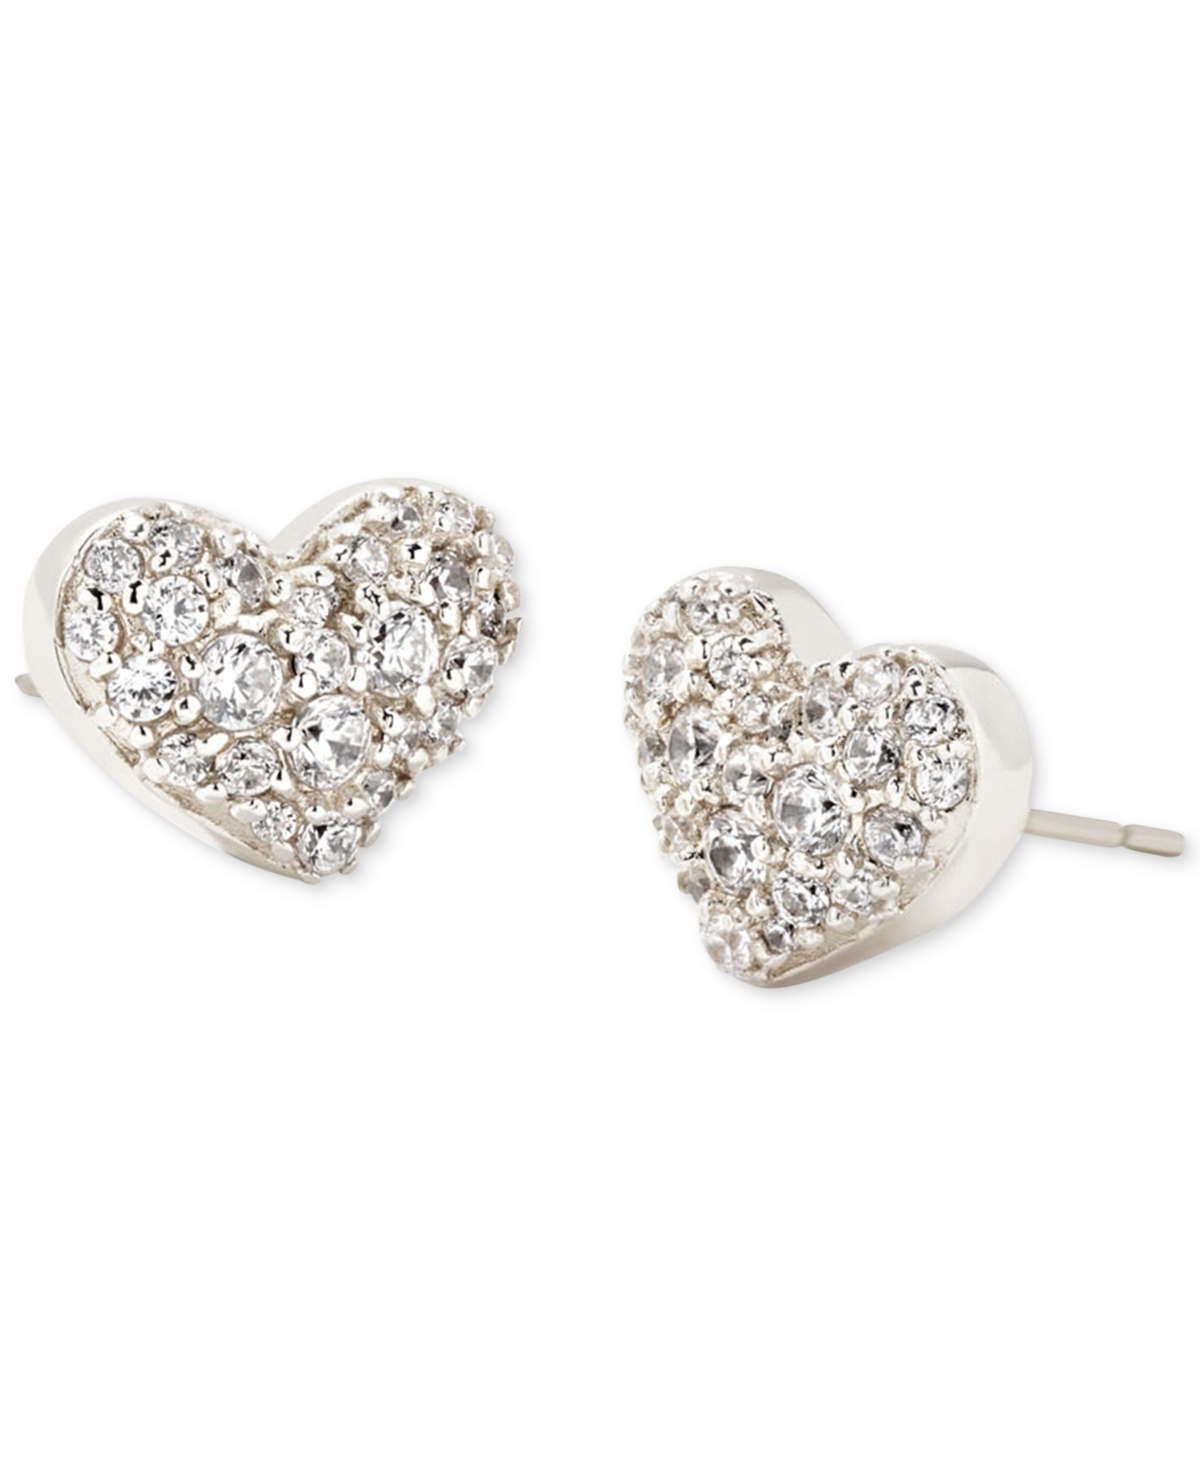 Kendra Scott Pave Crystal Heart-Shaped Stud Earrings